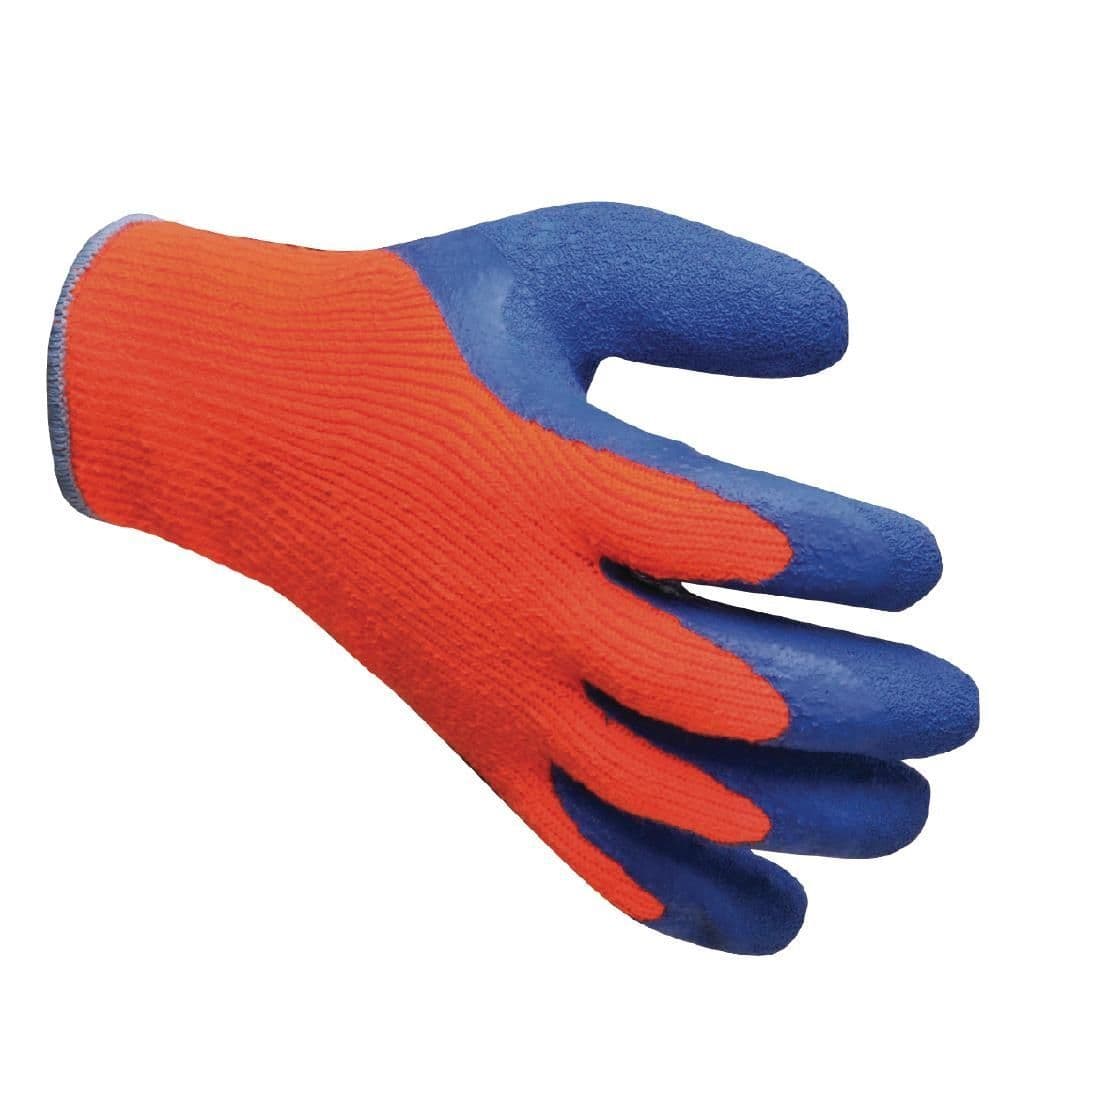 Freezer Gloves JD Catering Equipment Solutions Ltd